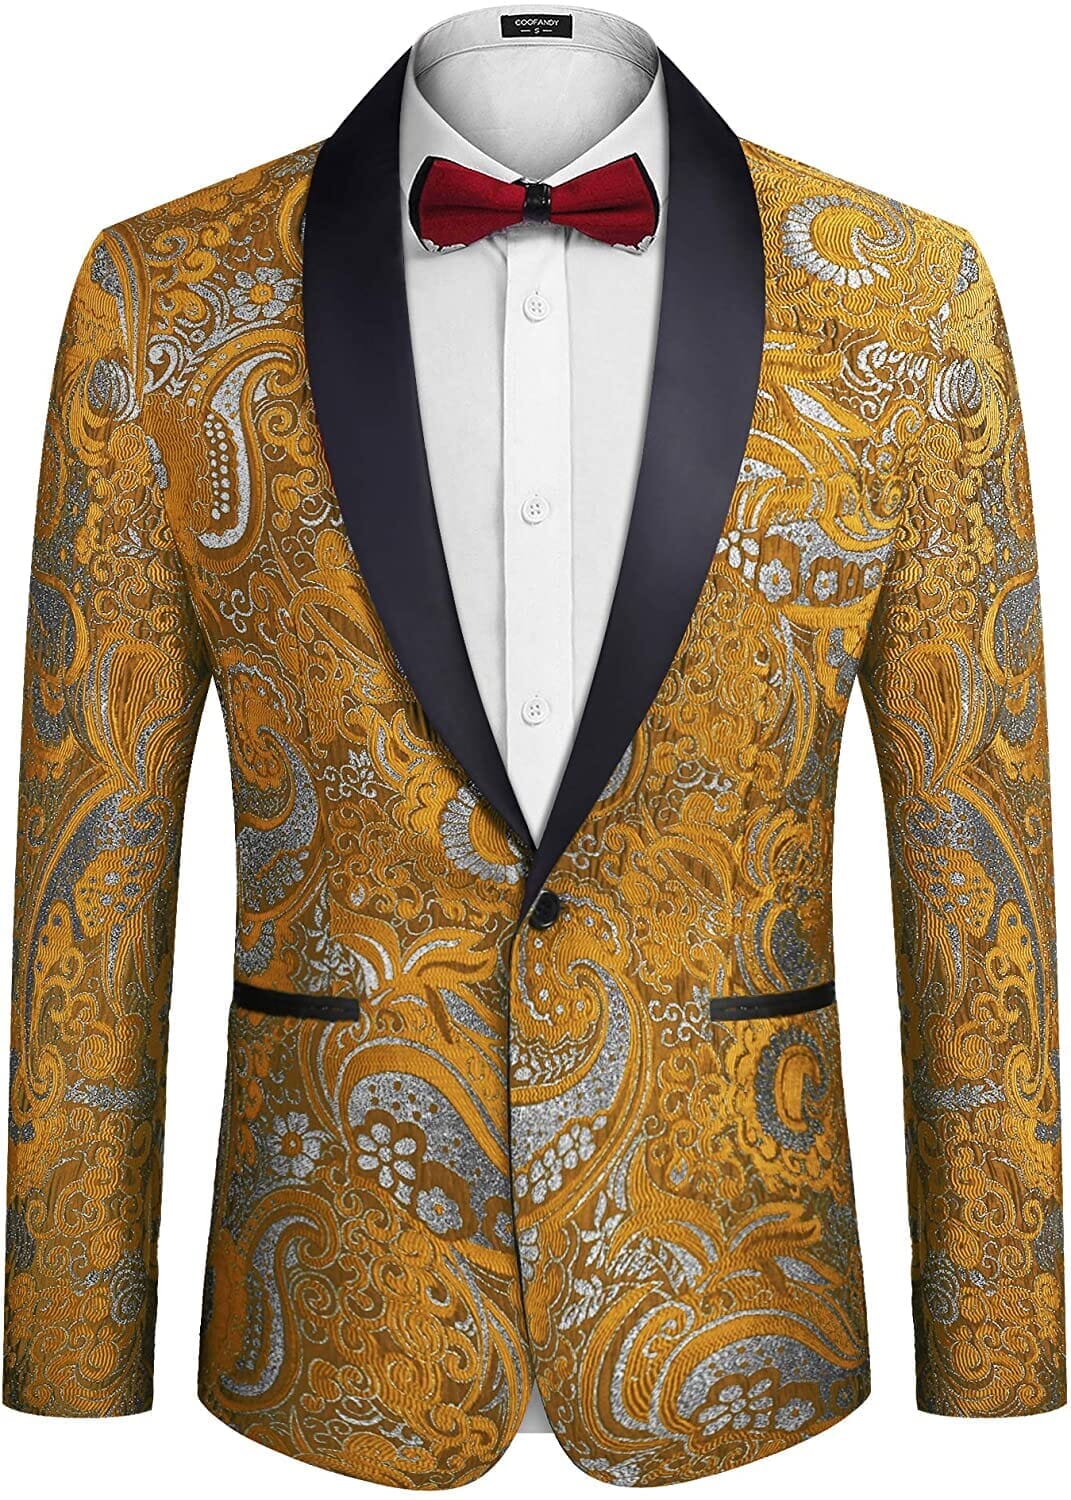 Coofandy Luxury Embroidered Blazer (US Only) Blazer coofandy Golden Yellow S 